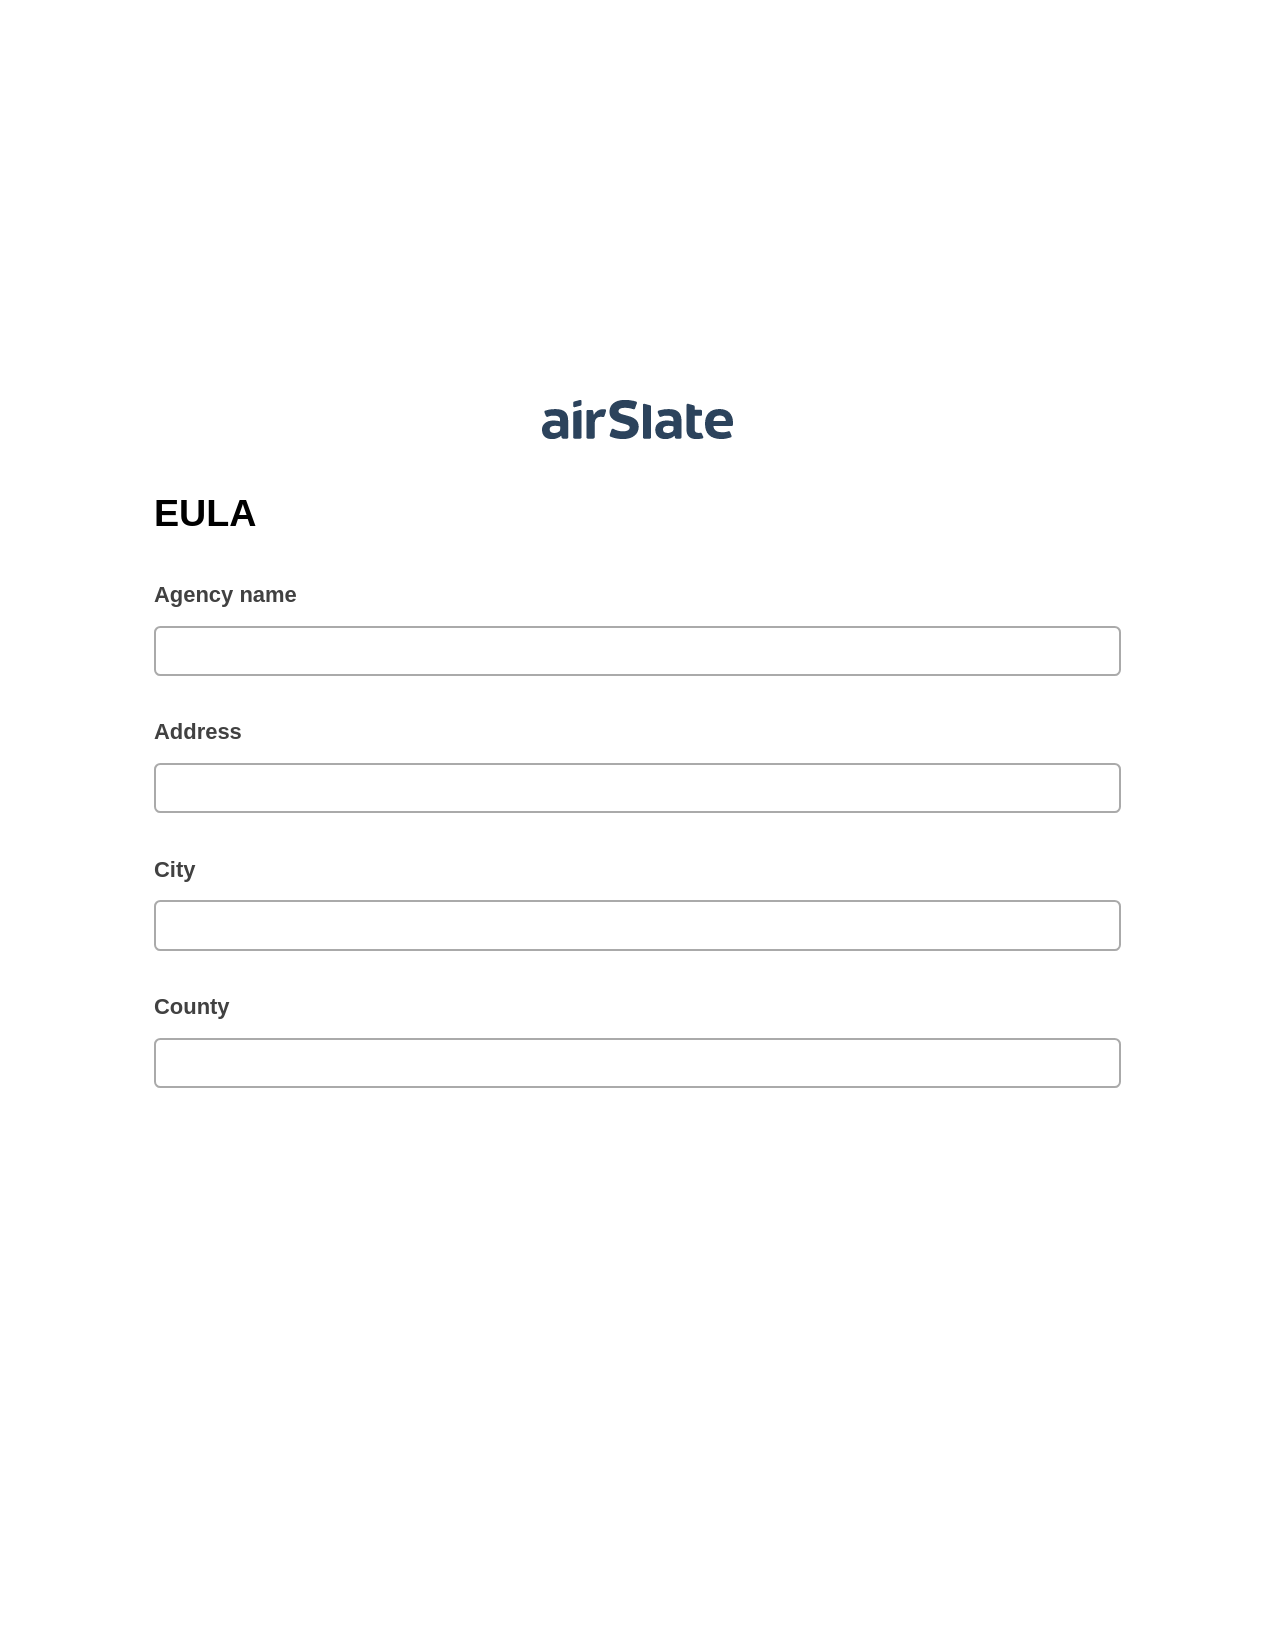 EULA Pre-fill from CSV File Bot, SendGrid send Campaign bot, OneDrive Bot